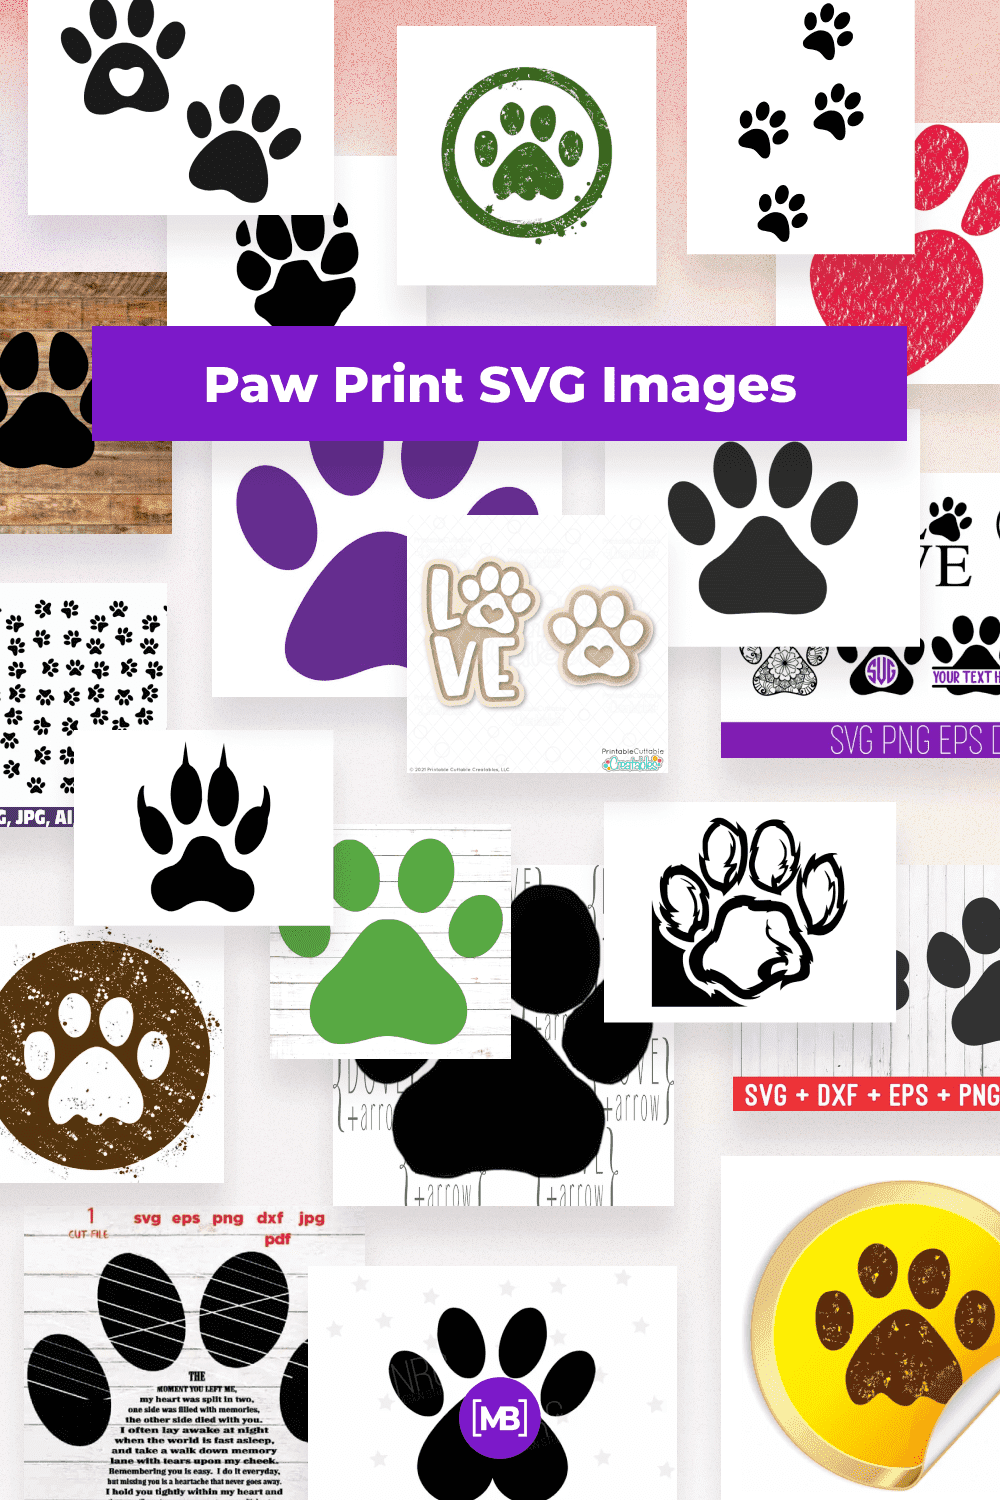 Paw Print SVG Designs Pinterest.